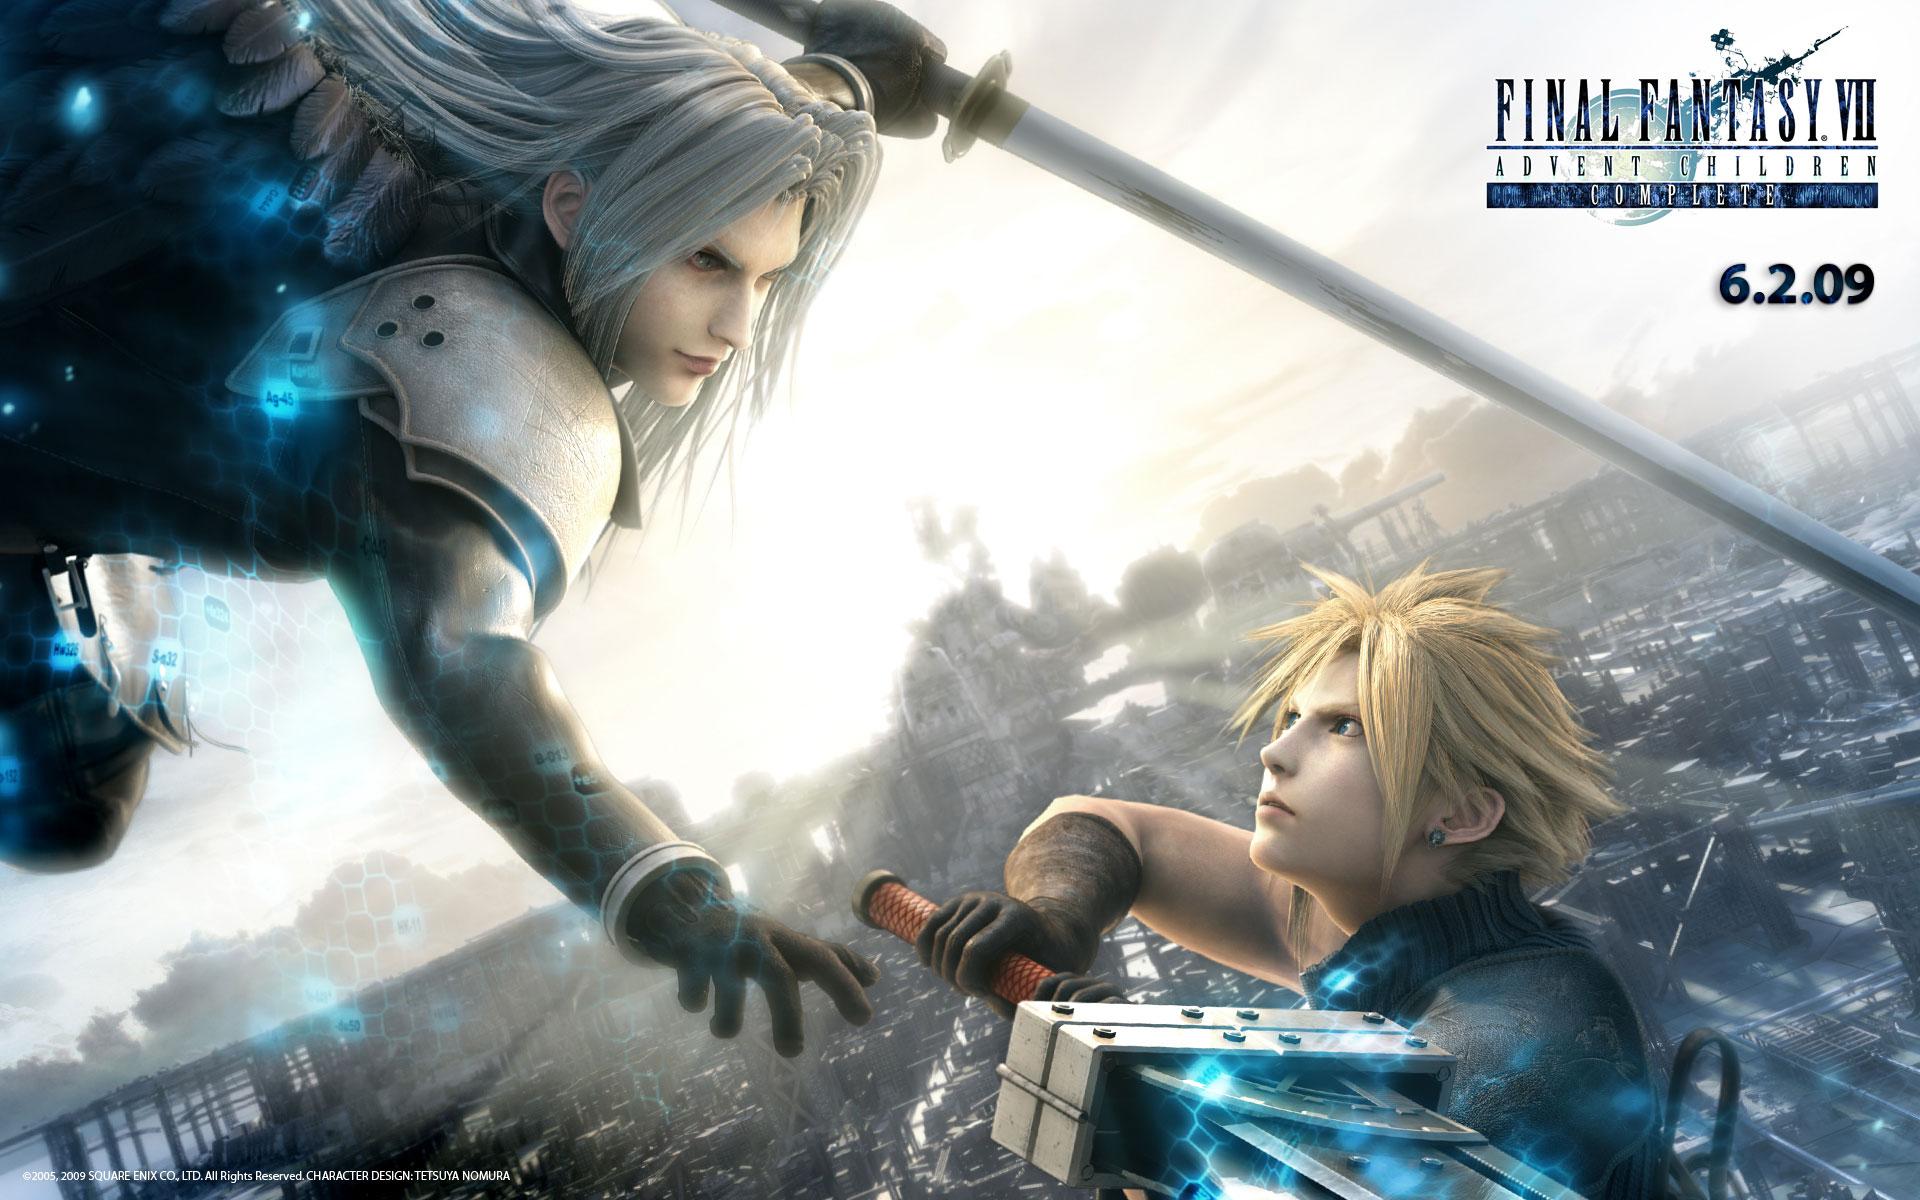 Wallpaper Final Fantasy Final Fantasy VII: Agent Children vdeo game